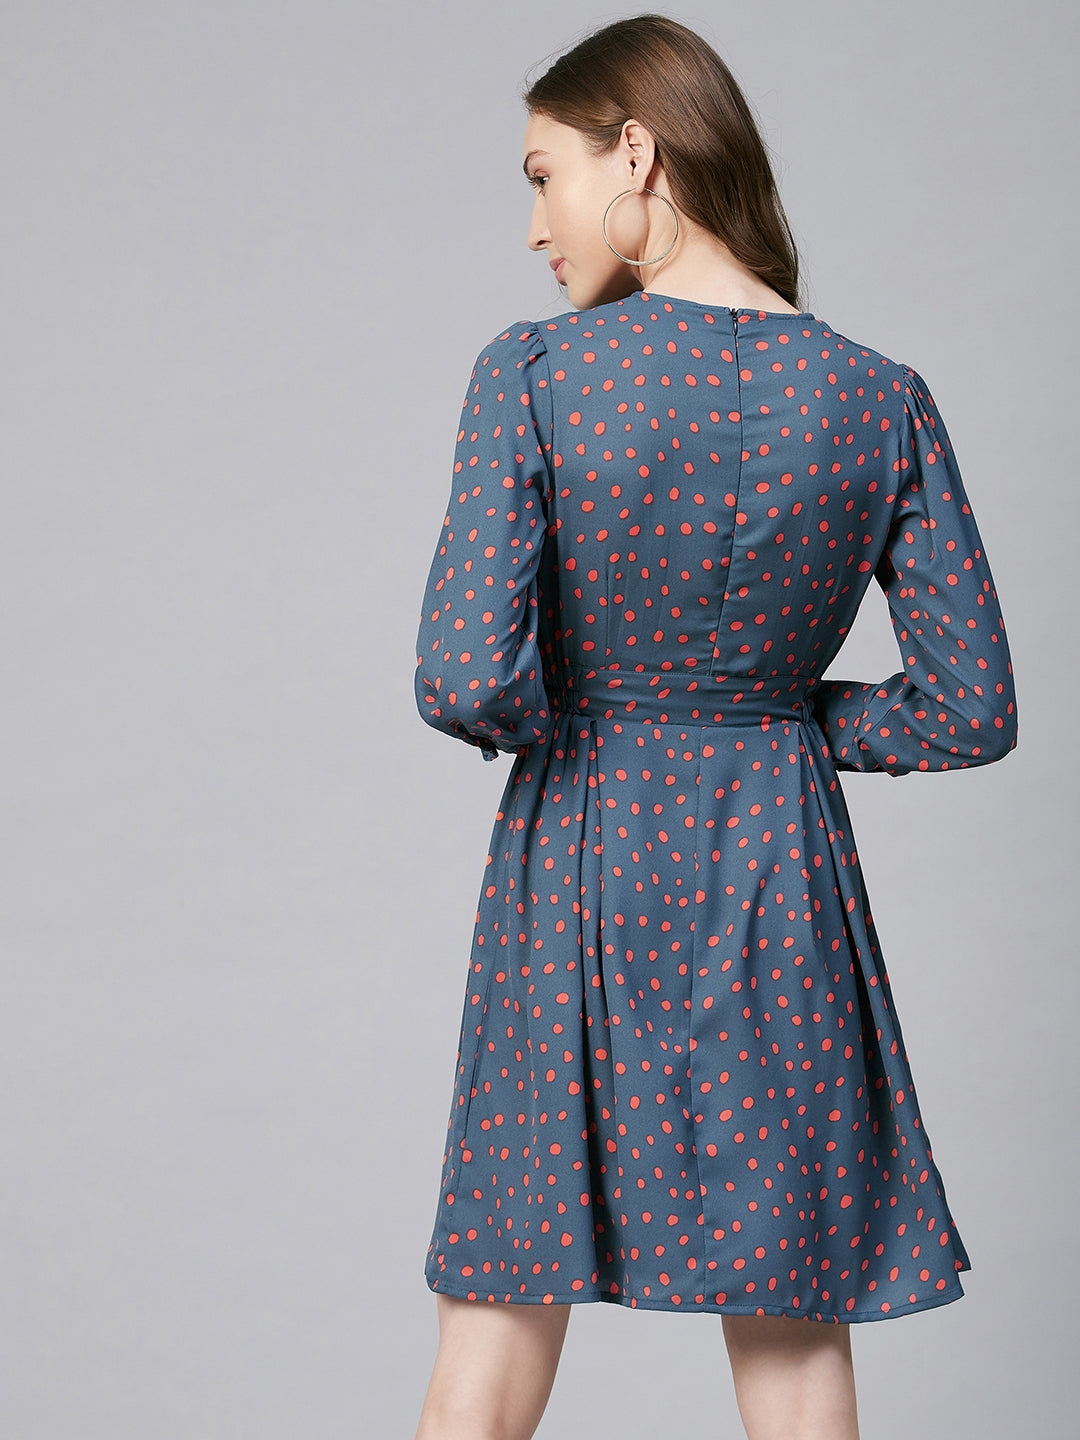 Women's Grey & Coral Polyester Pintuck Dress